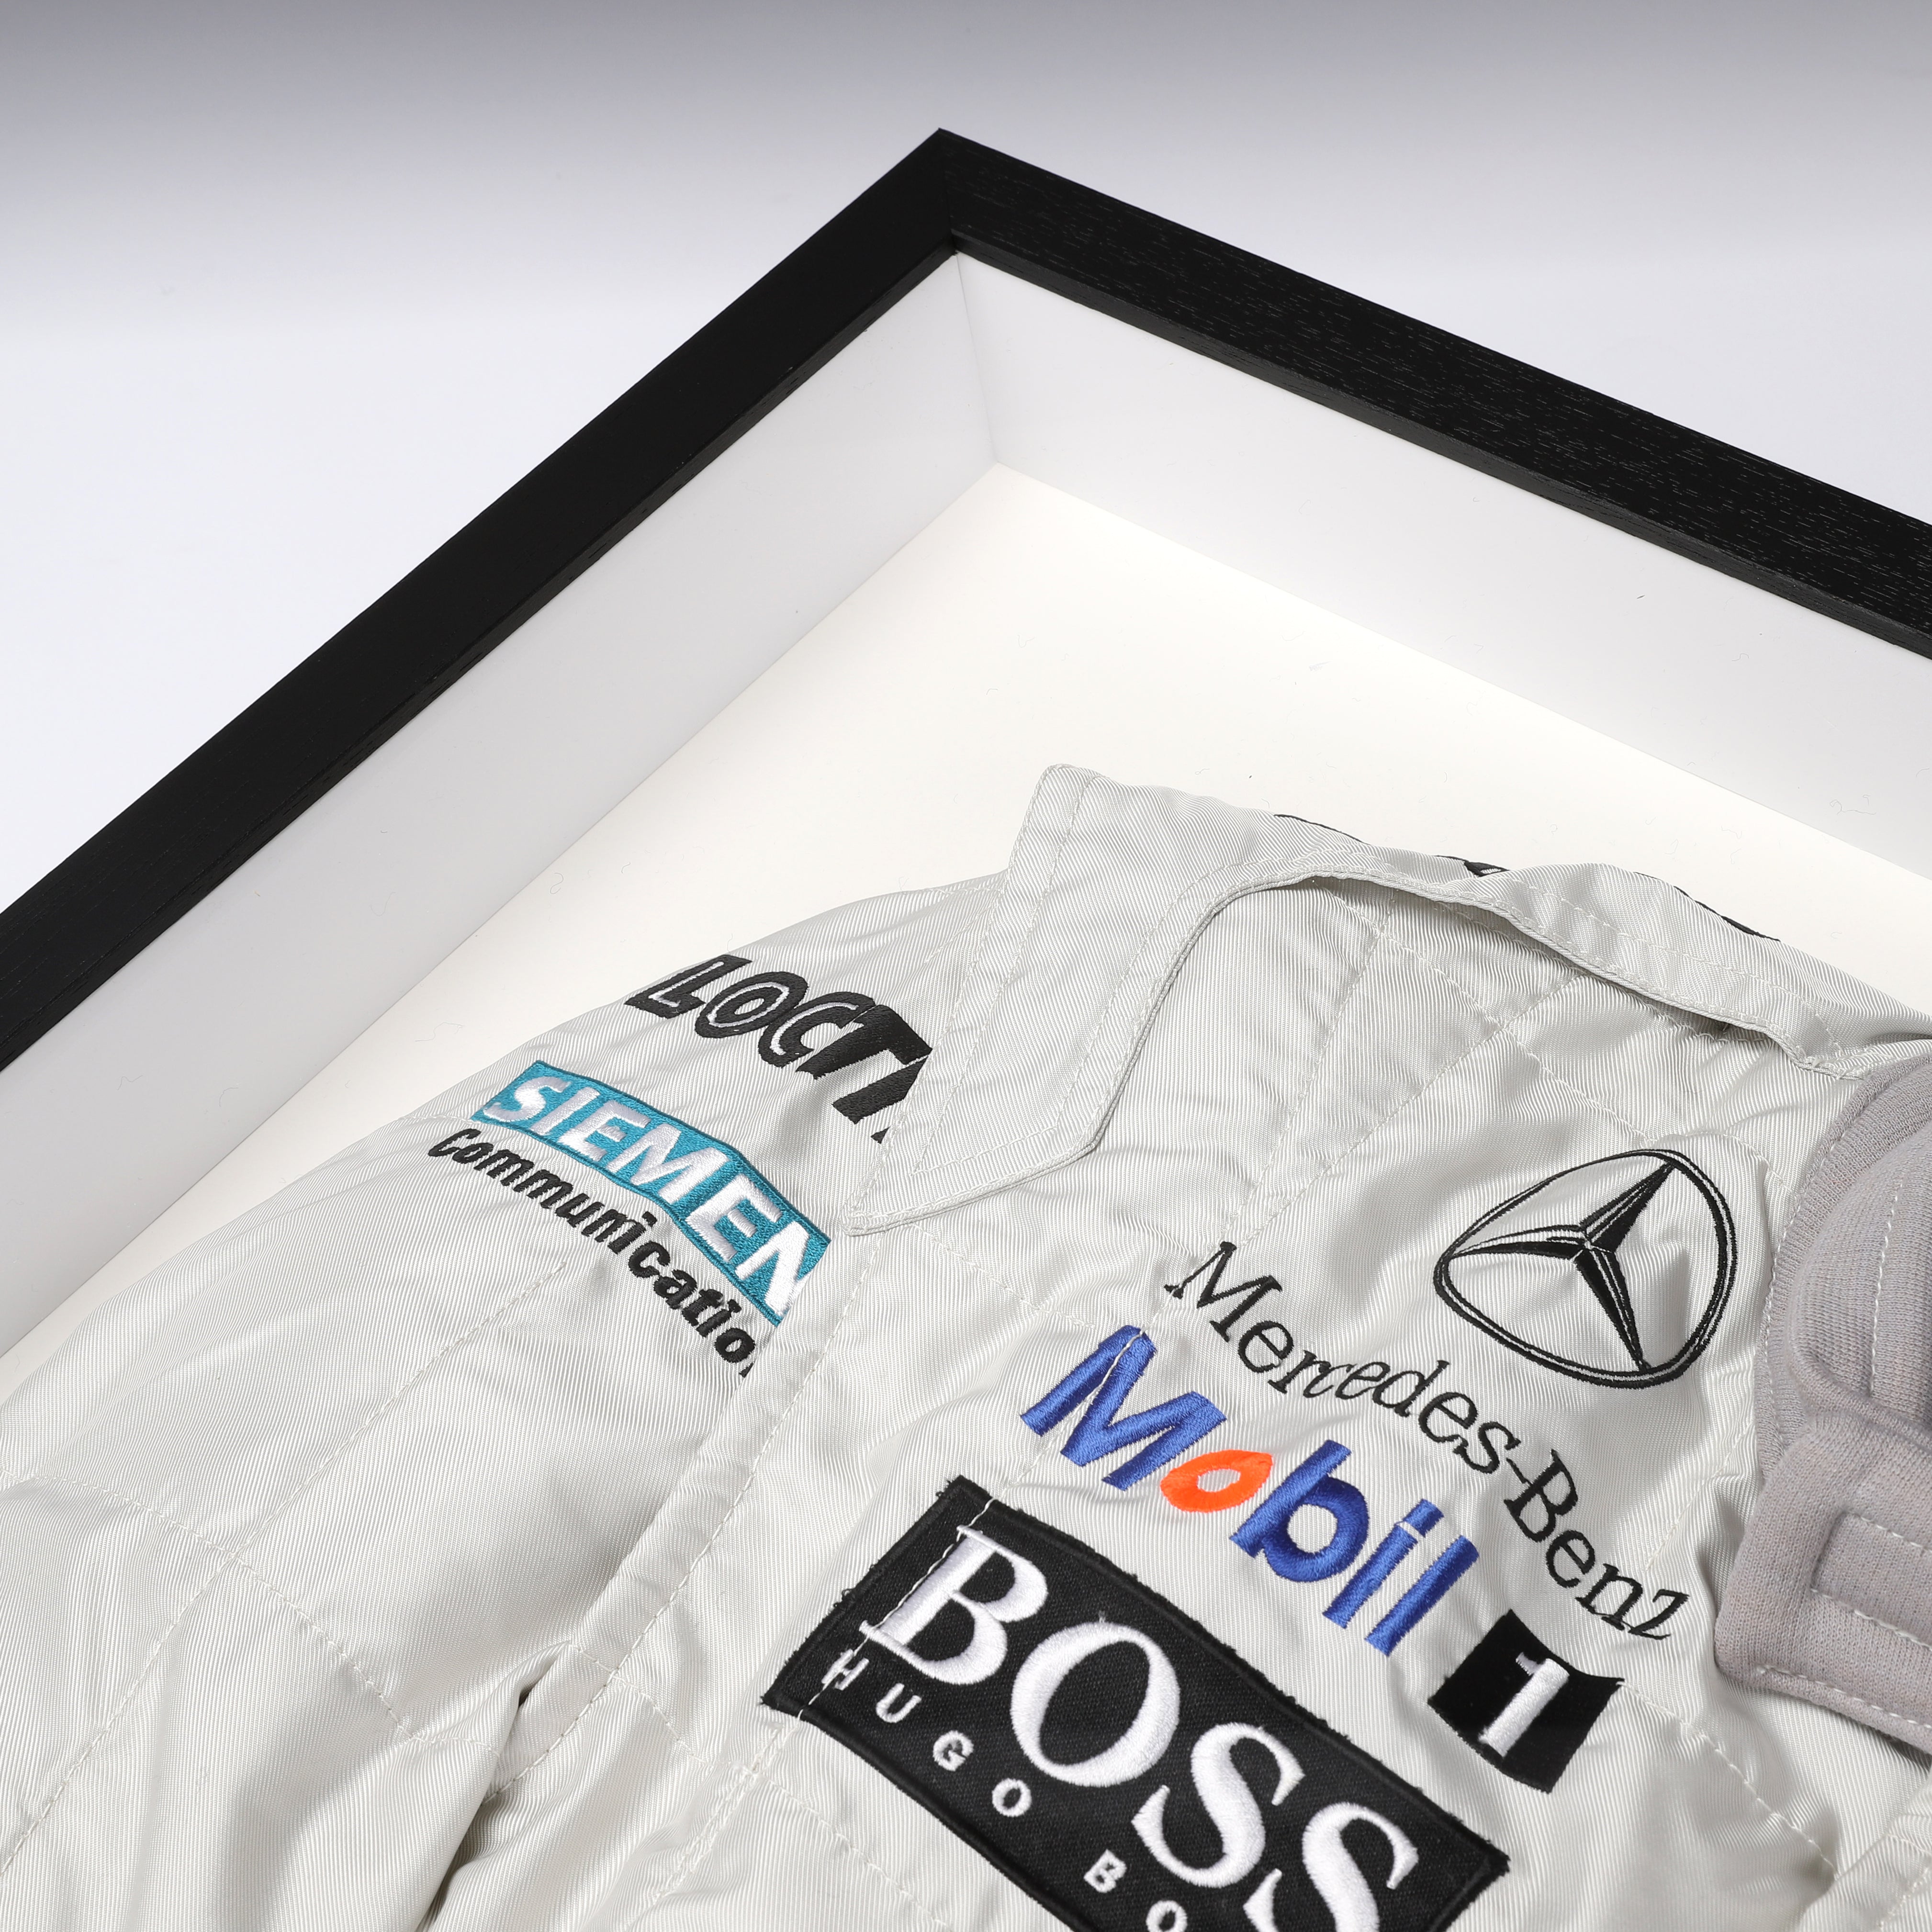 David Coulthard 1998 McLaren F1 Team Replica Race Suit with Computer Associates & Schweppes Branding